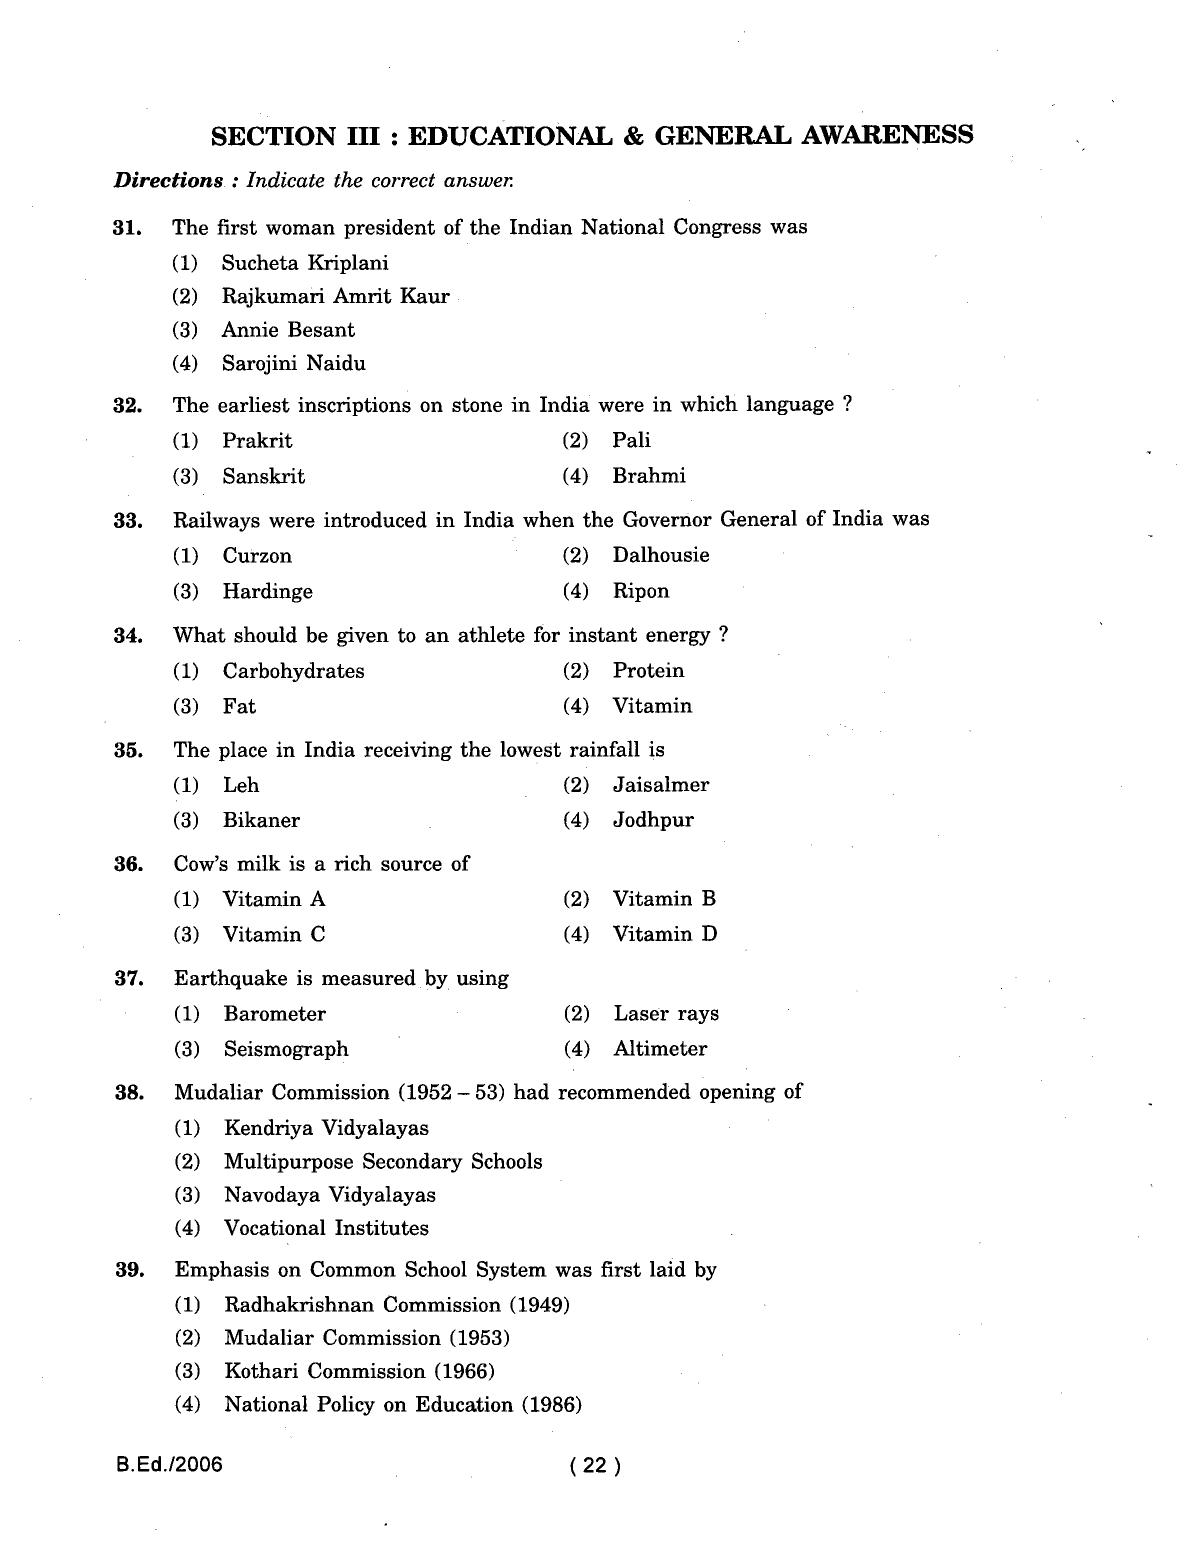 IGNOU B.Ed 2006 Question Paper - Page 22